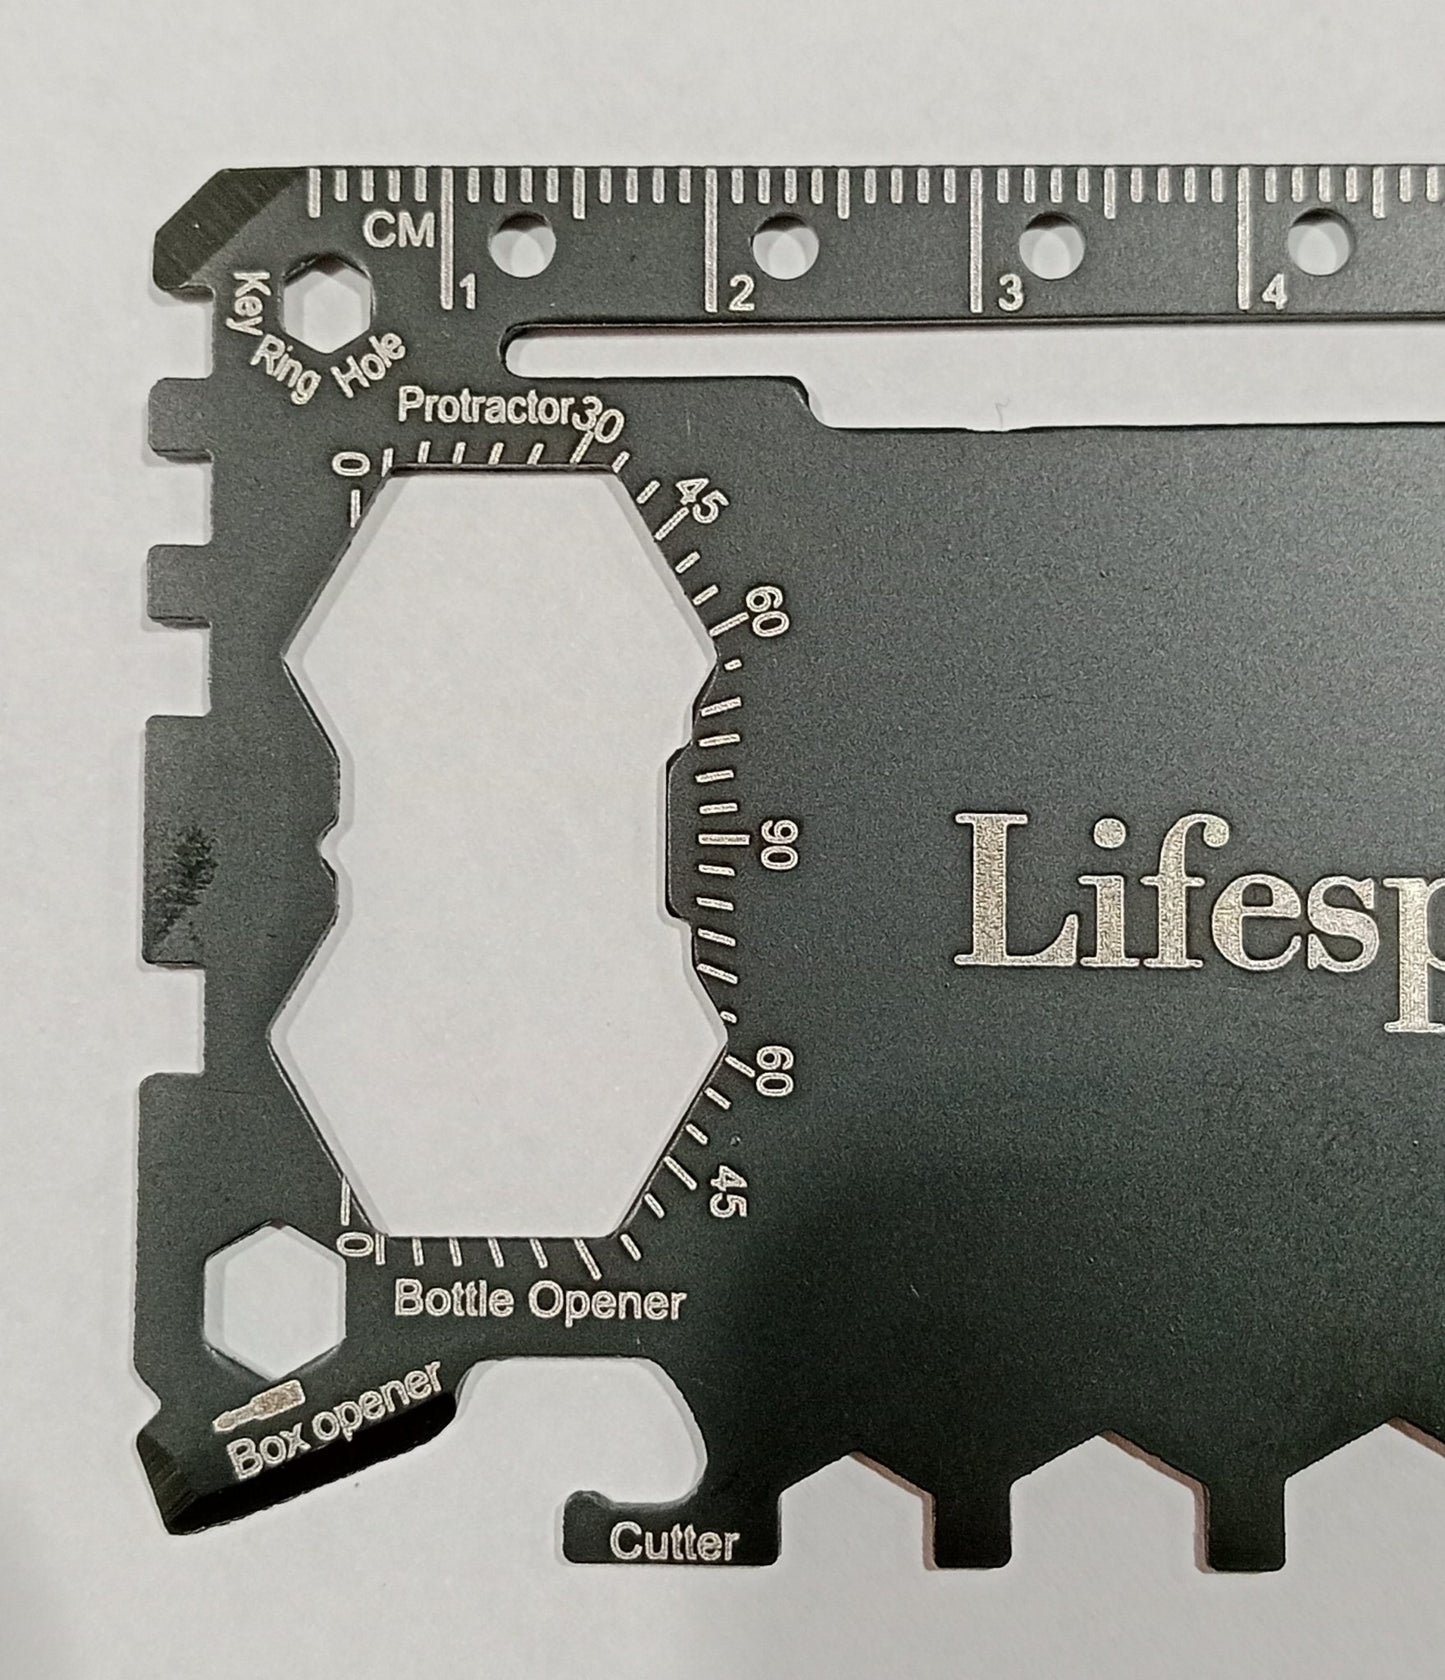 Lifespace Ninja Super Survival Stainless Steel Multi Tool Wallet Card - Lifespace